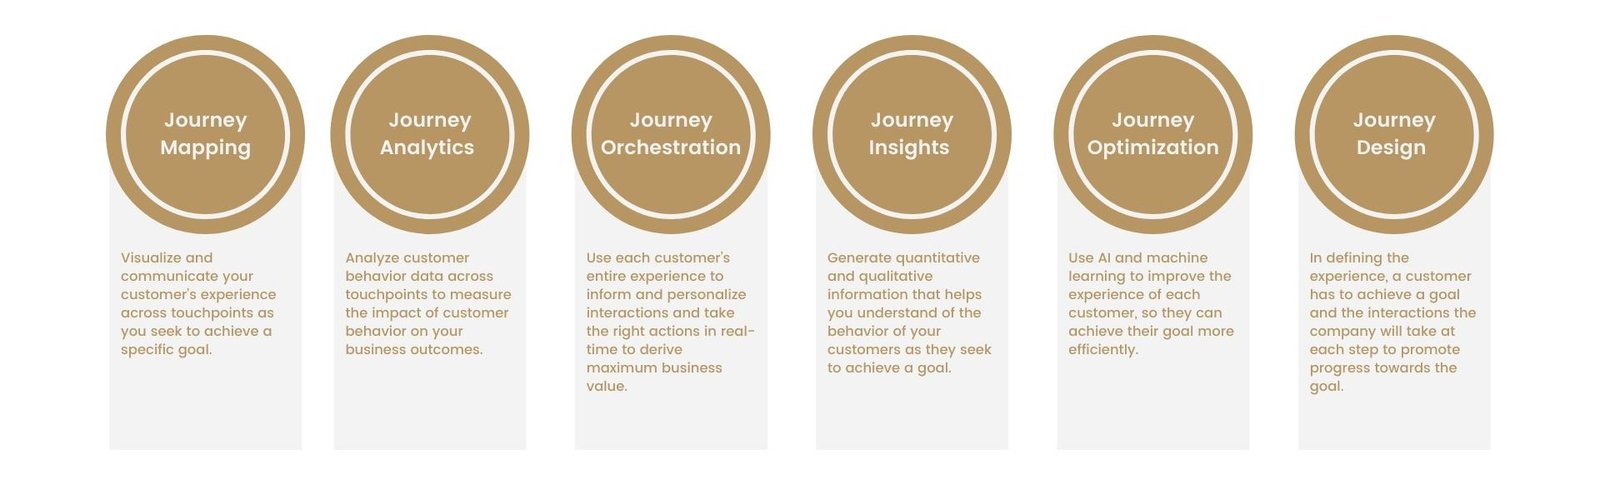 Customer Journey Management Process